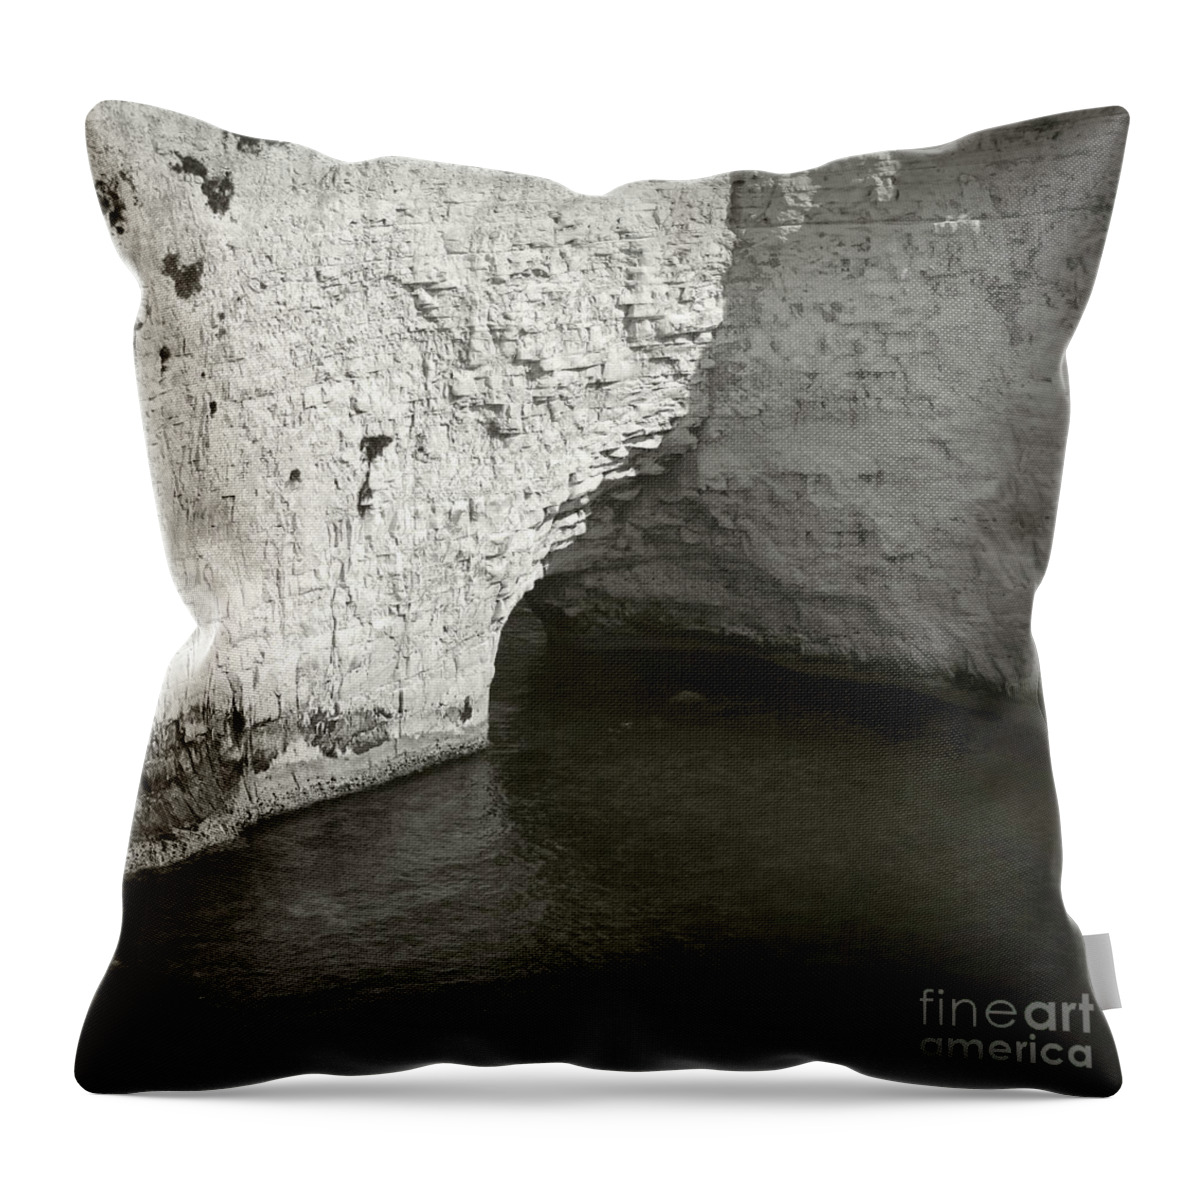 White Throw Pillow featuring the photograph Rock and Water by Sebastian Mathews Szewczyk